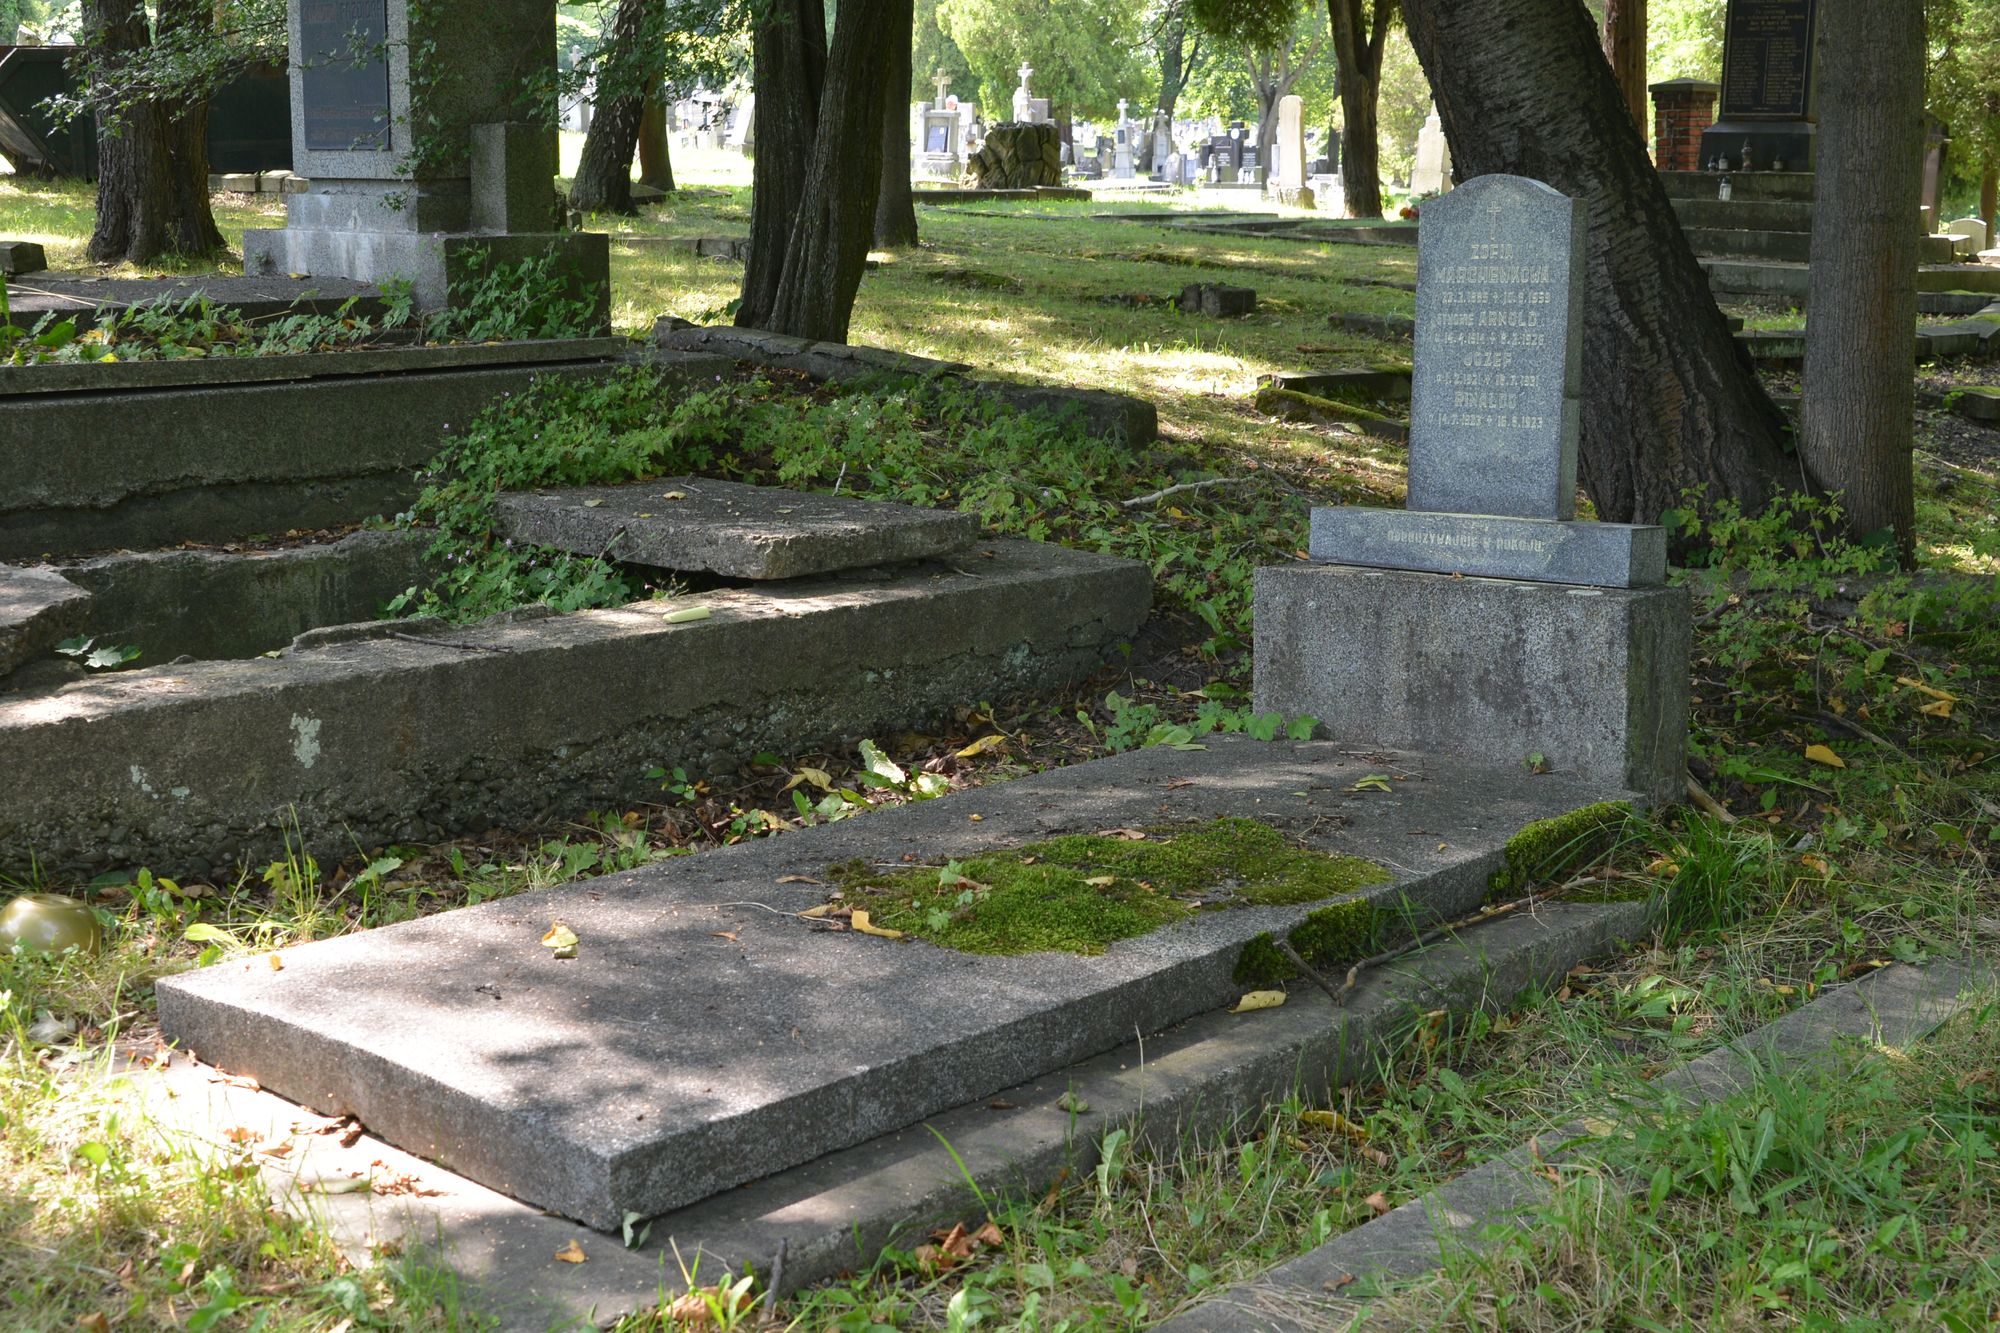 Tombstone of the Marchewka family, Karviná Doły cemetery